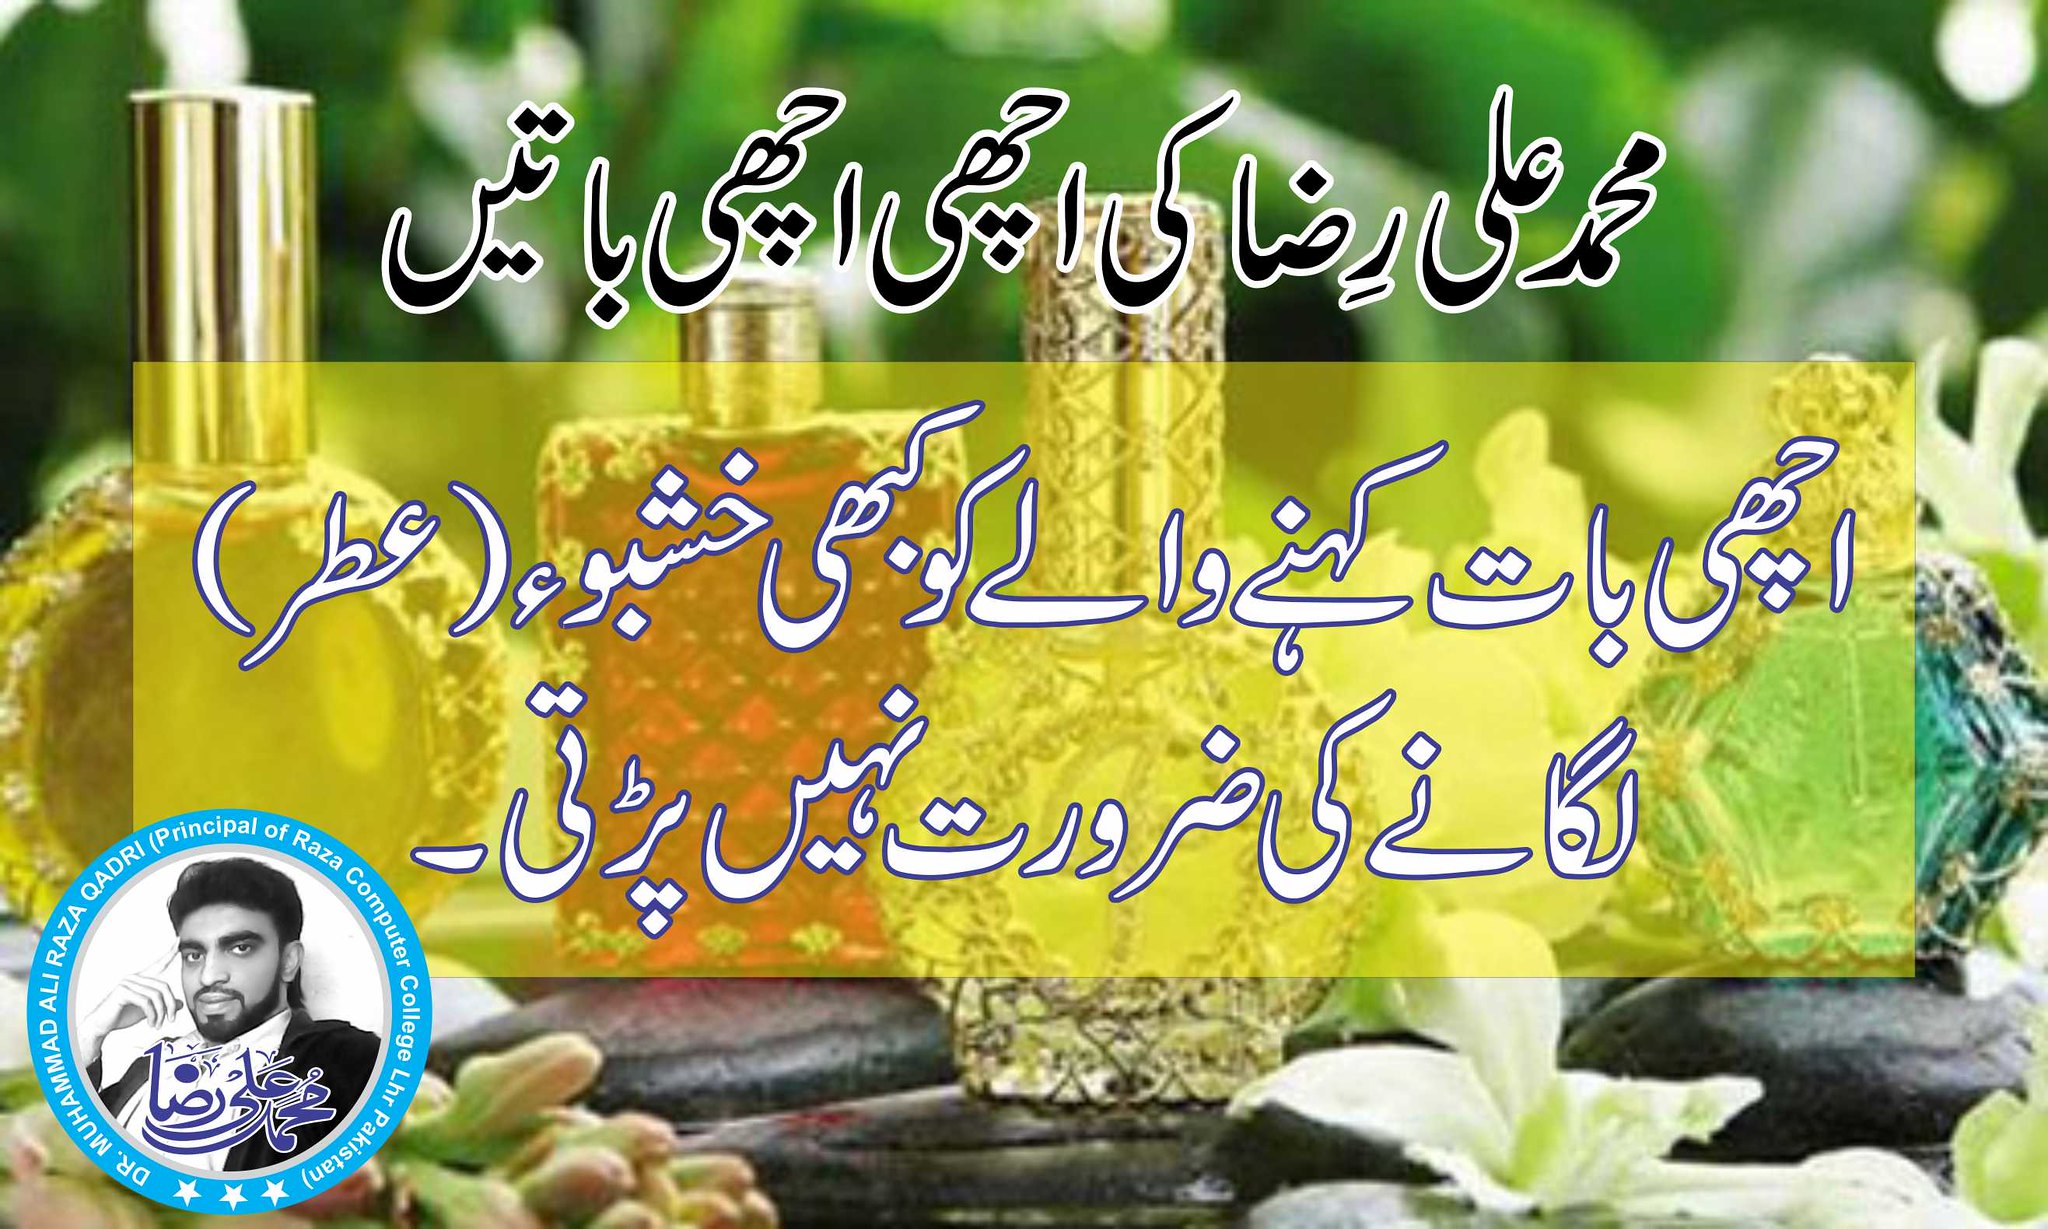 Urdu Beautiful Quotes Islamic and Best Golden Words ...